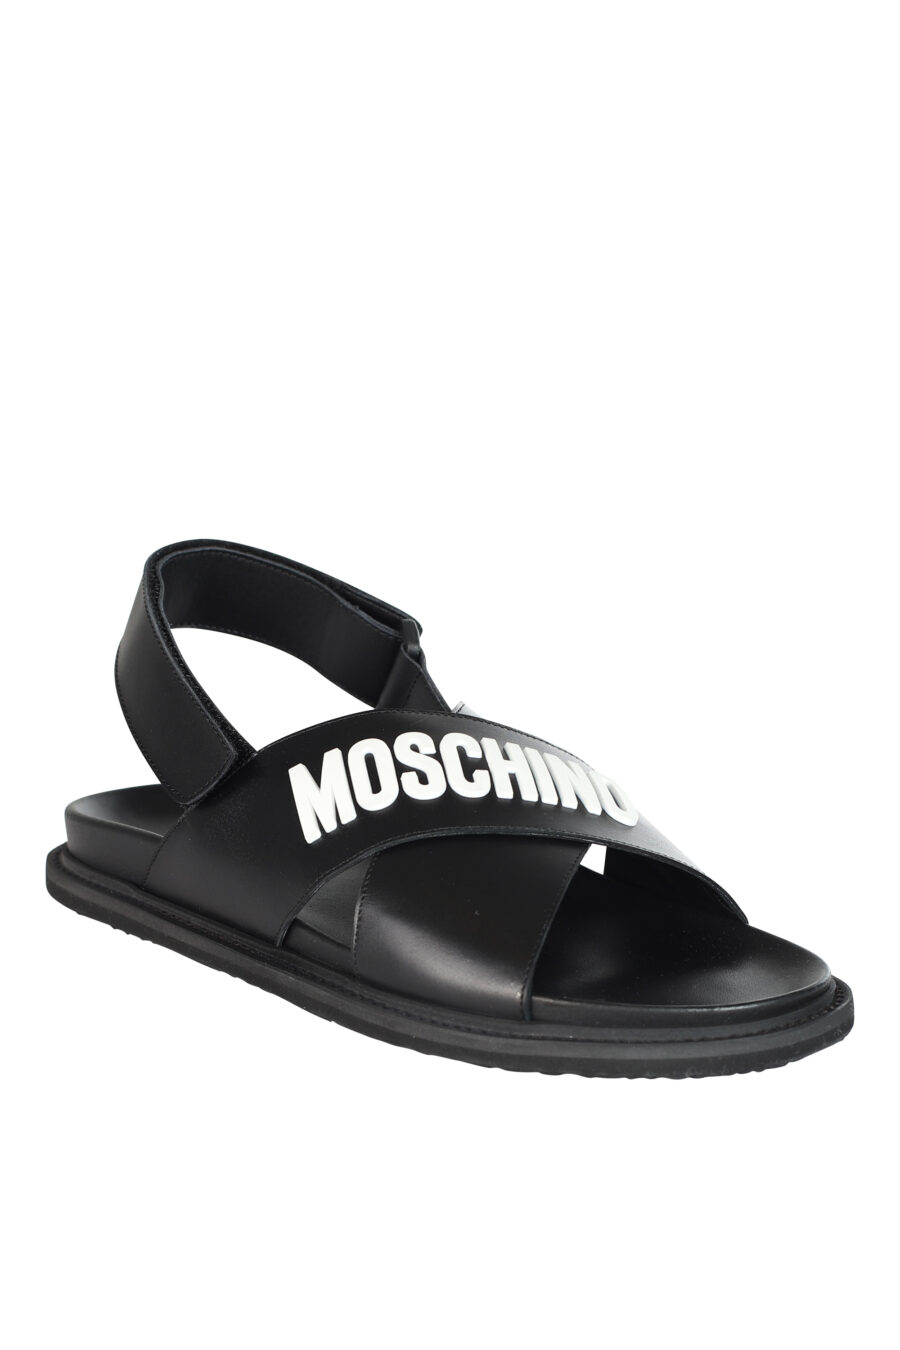 Black crossed sandals with white maxilogo - 8059022514769 2